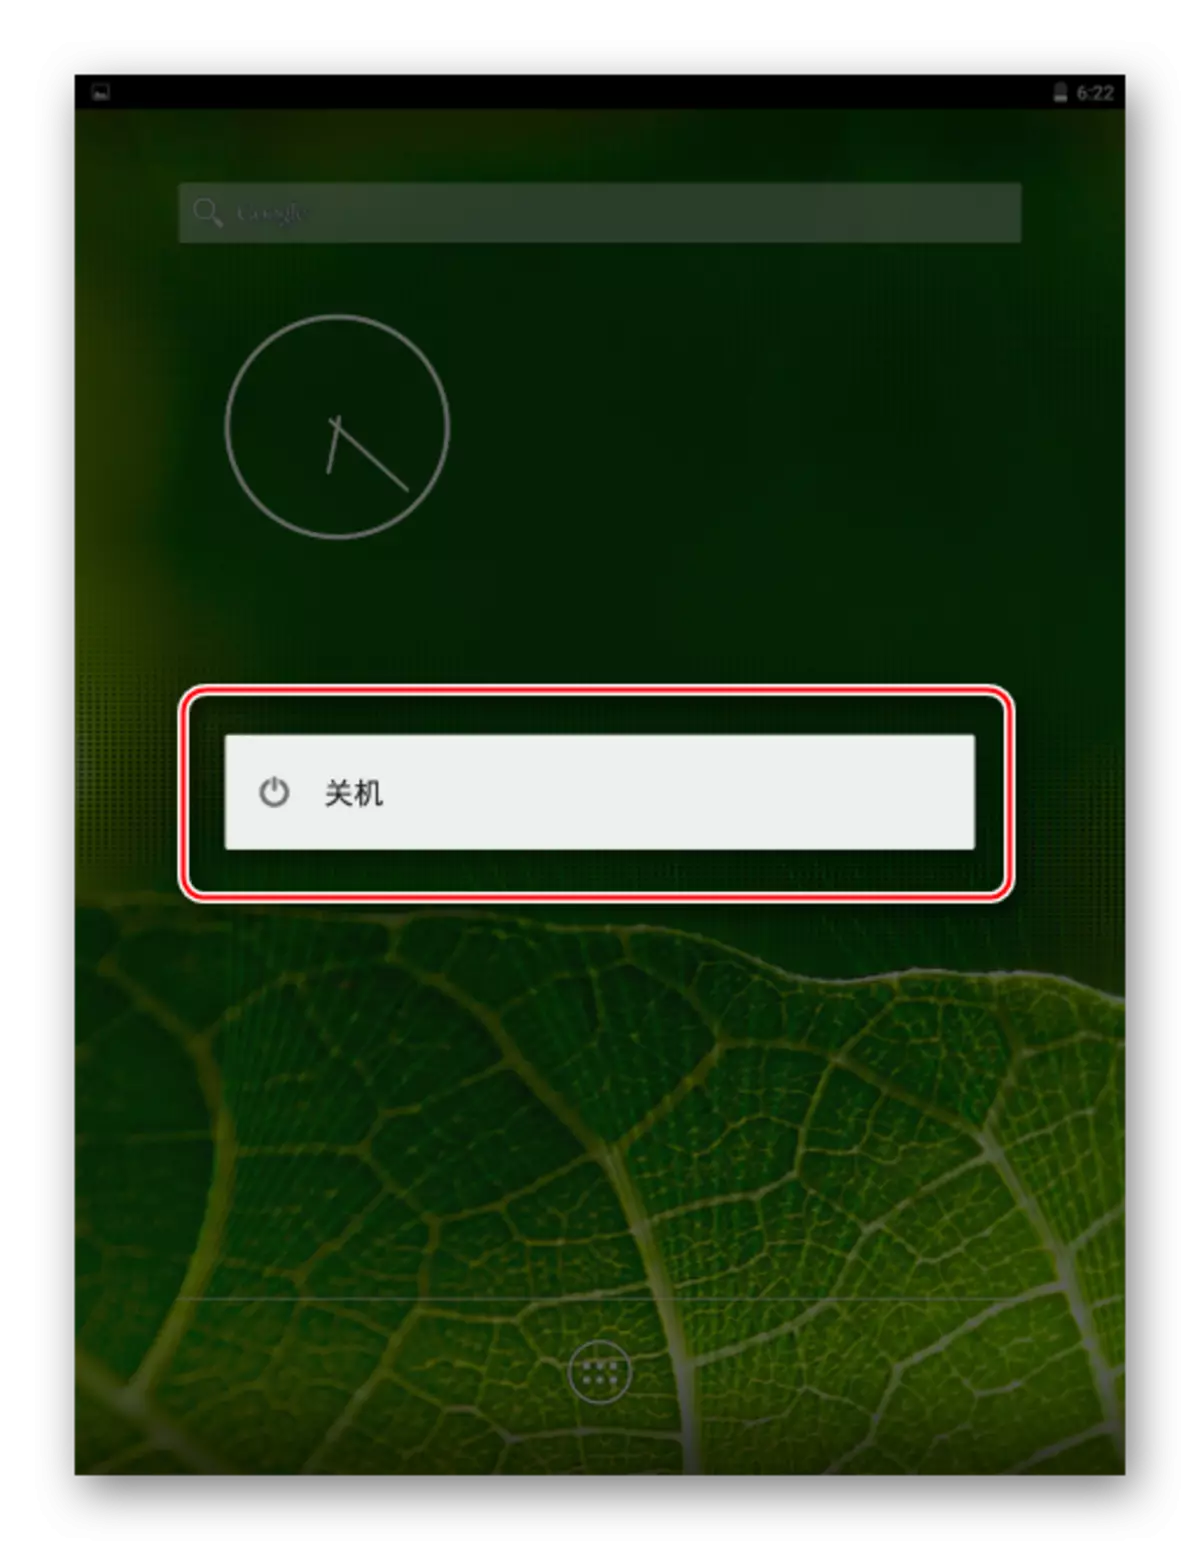 Xiaomi Mipad 2 Slå av enheten under kontrollen av ren android